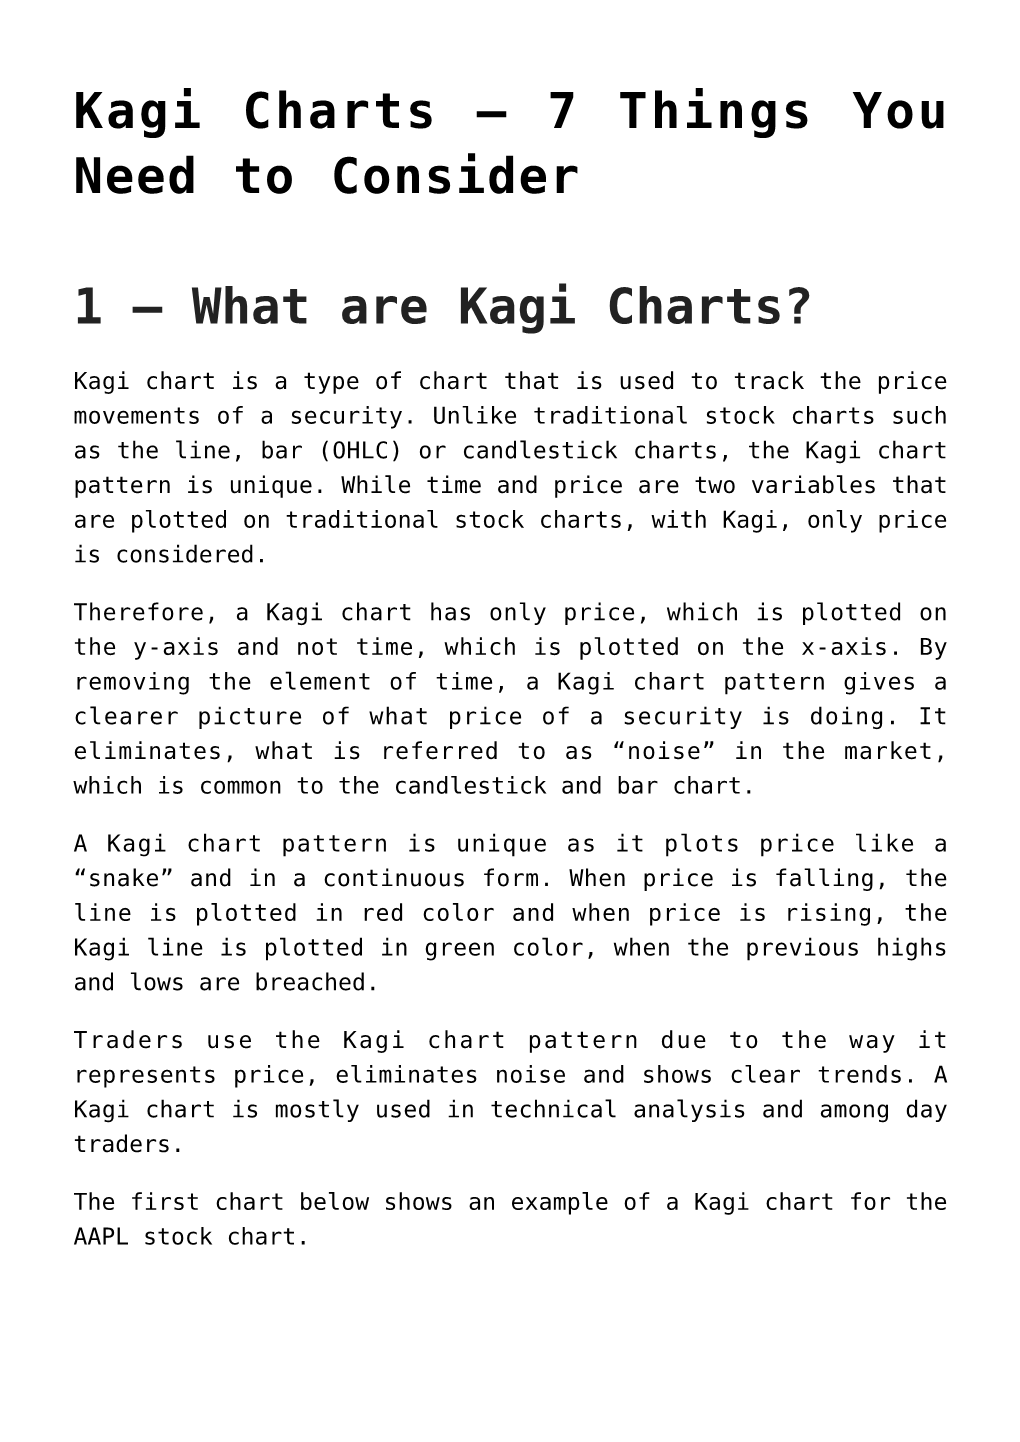 What Are Kagi Charts?